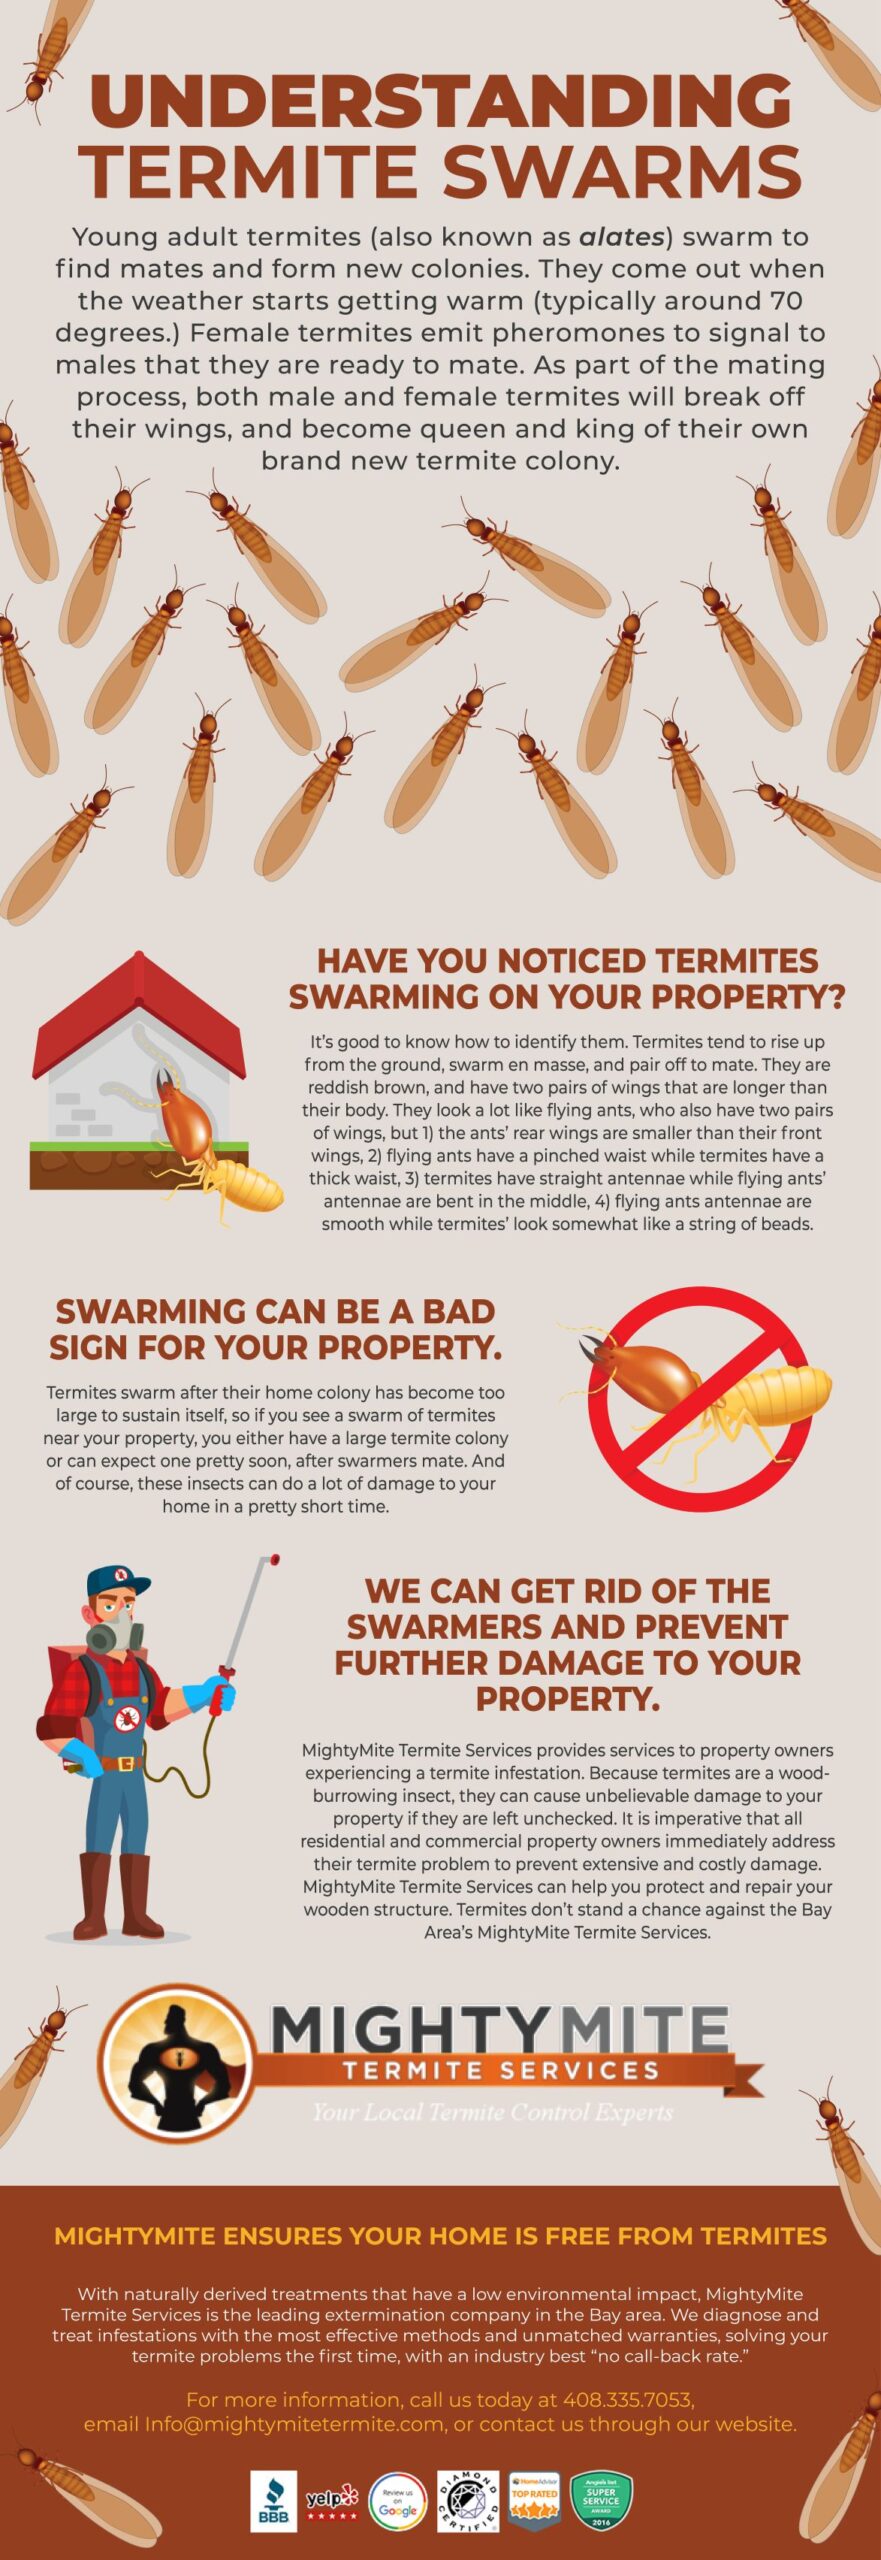 Understanding Termite Swarms